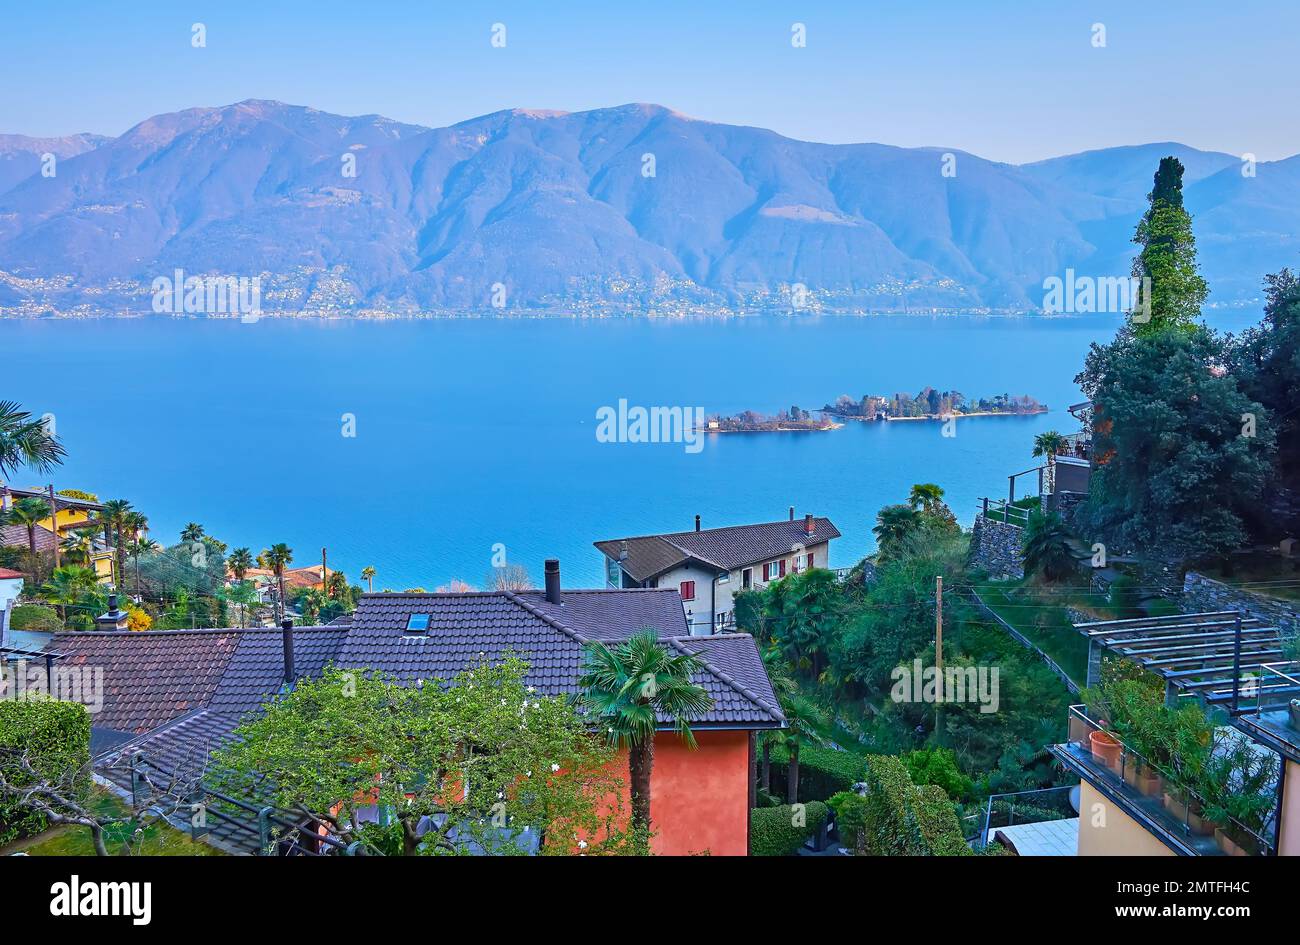 Enjoy Alpine scenery, hazy Lake Maggiore and tiny Brissago Islands, seen from the garden in Ronco sopra Ascona, Switzerland Stock Photo